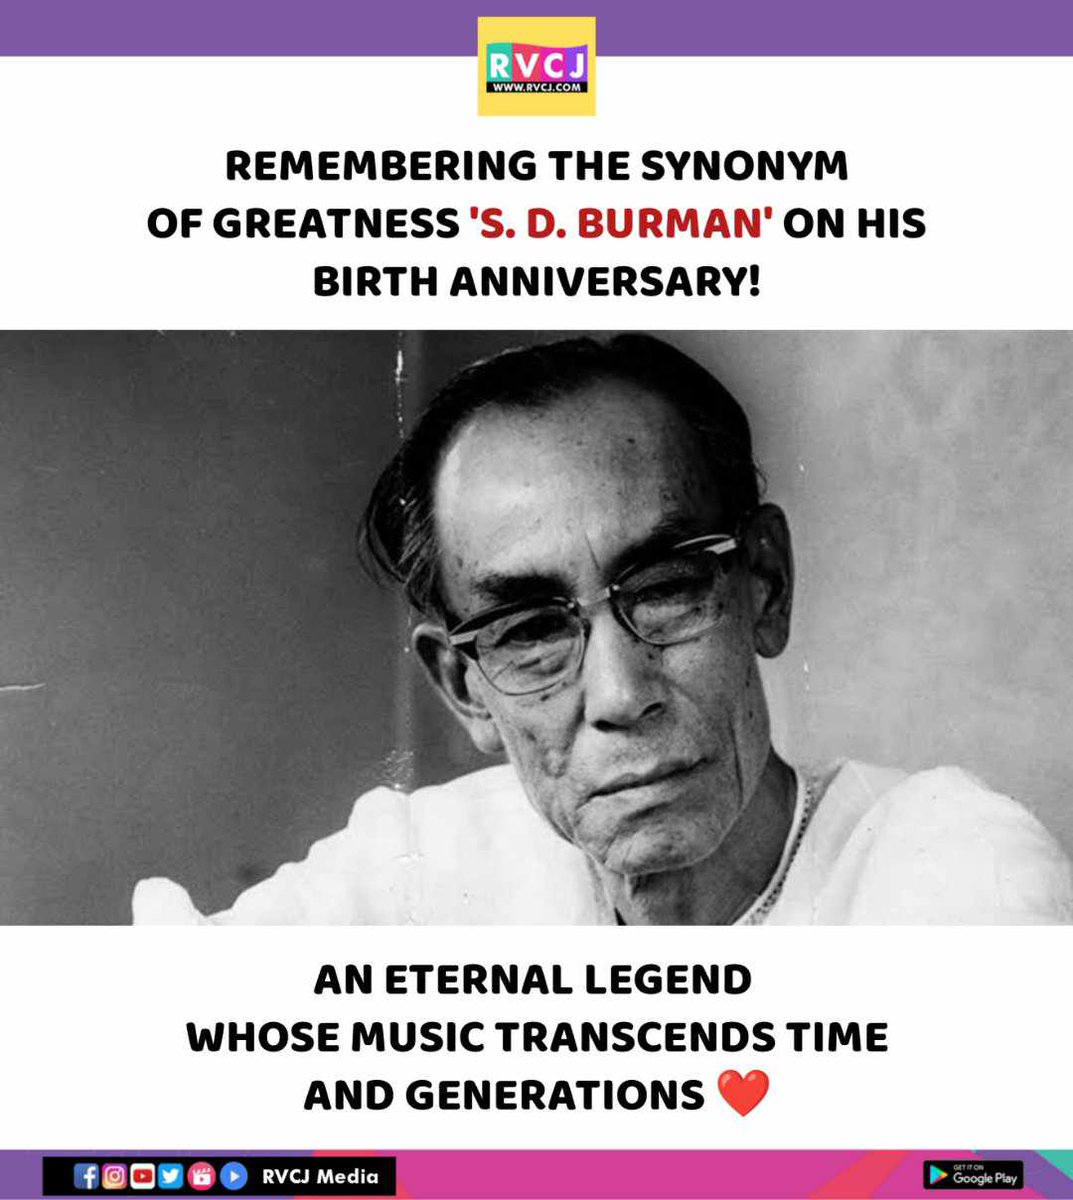 Remembering S. D. Burman on his birth anniversary!

#sdburman #birthanniversary #rvcjinsta #rvcjmovies